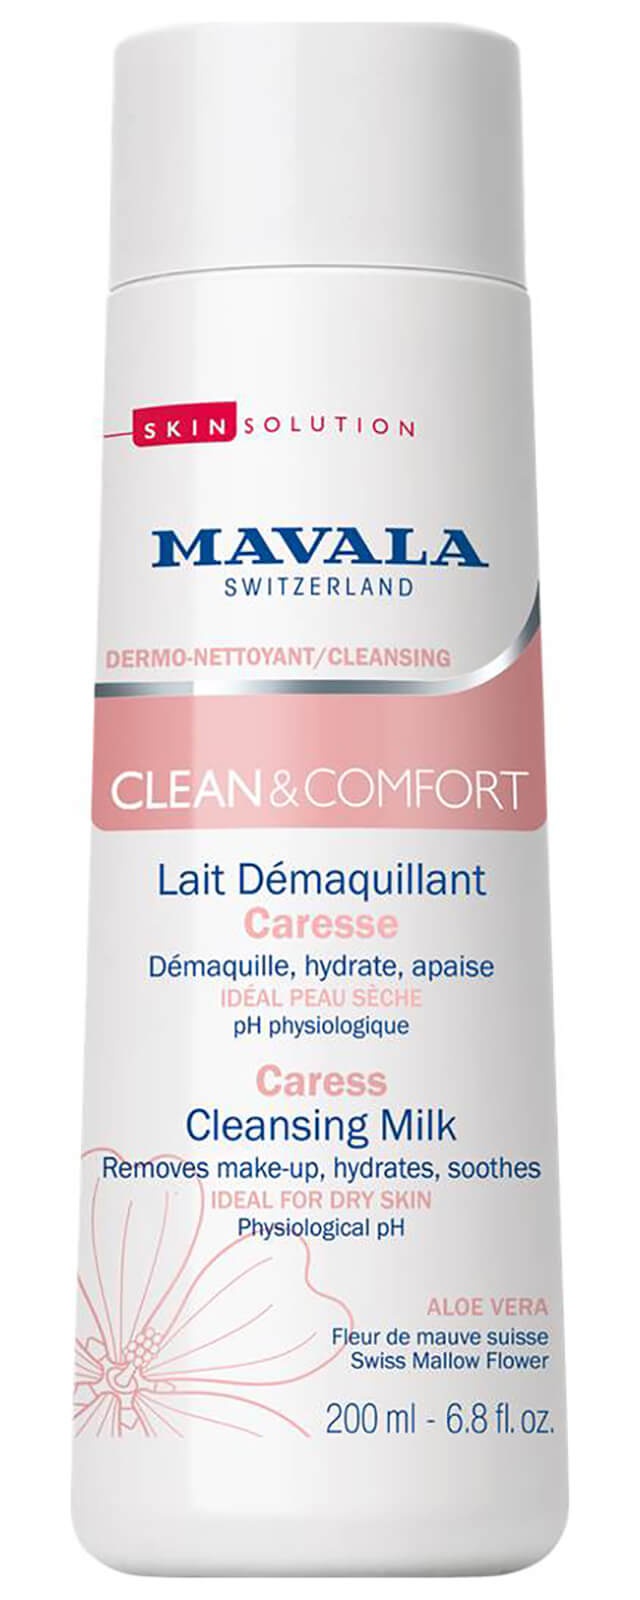 Mavala Clean & Comfort Caress Cleansing Milk